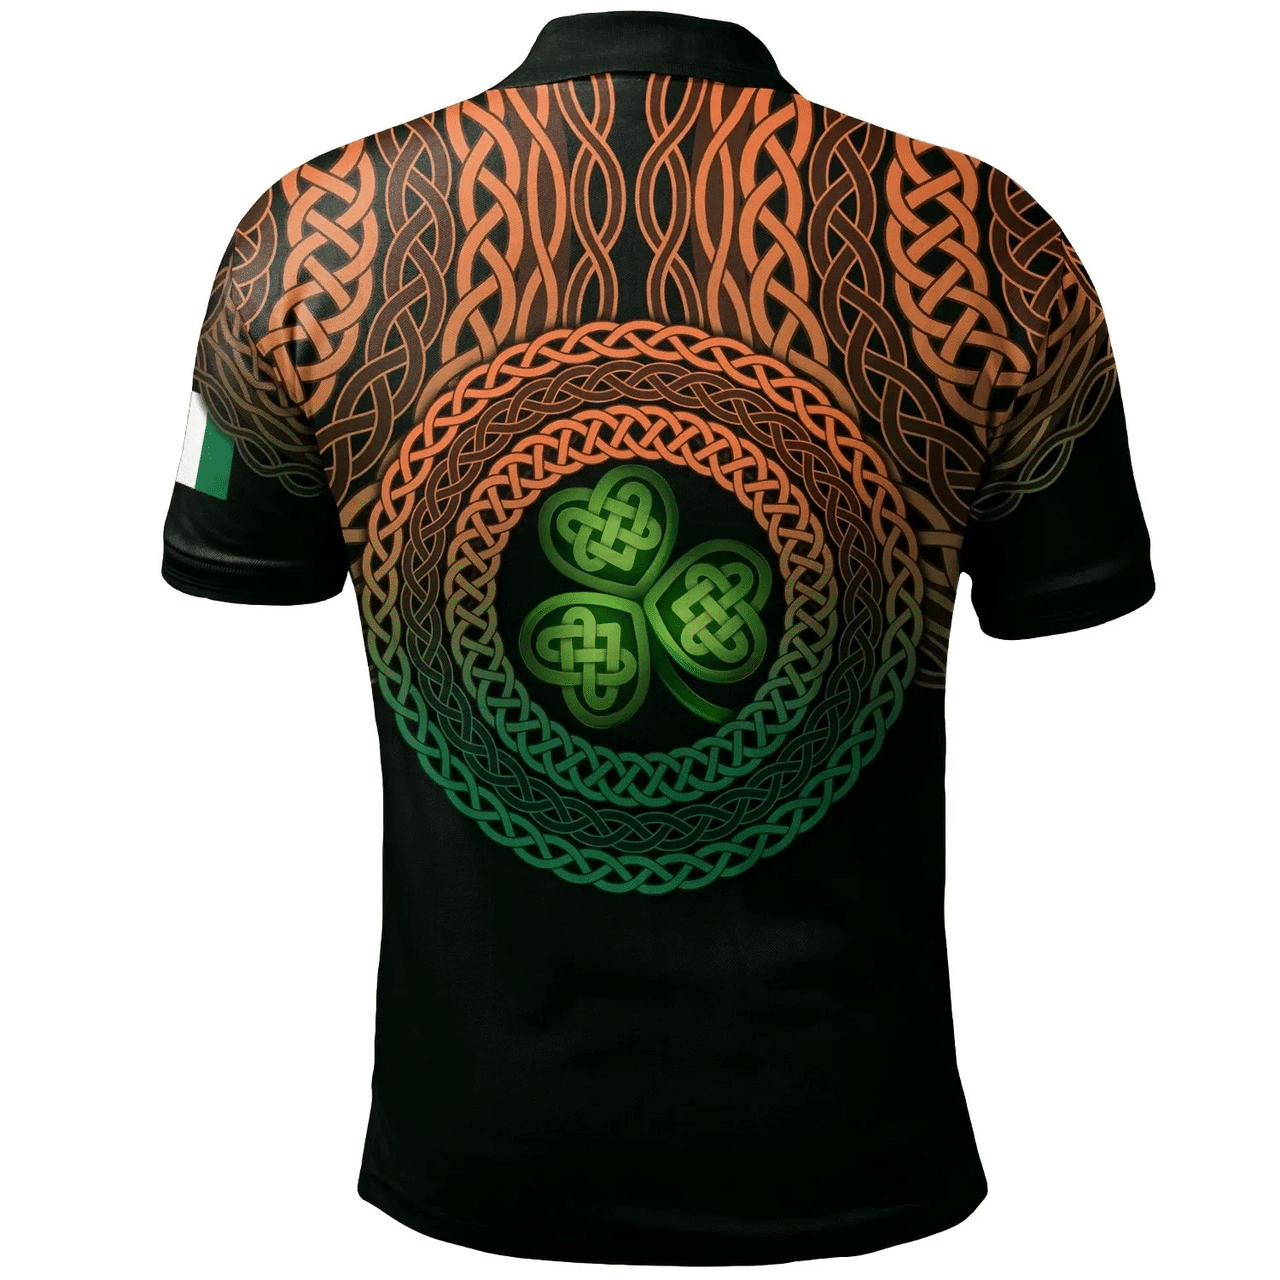 1stIreland Ireland Polo Shirt - Concanon or O'Concanon Irish Family Crest Polo Shirt - Celtic Pride A7 | 1stIreland.com